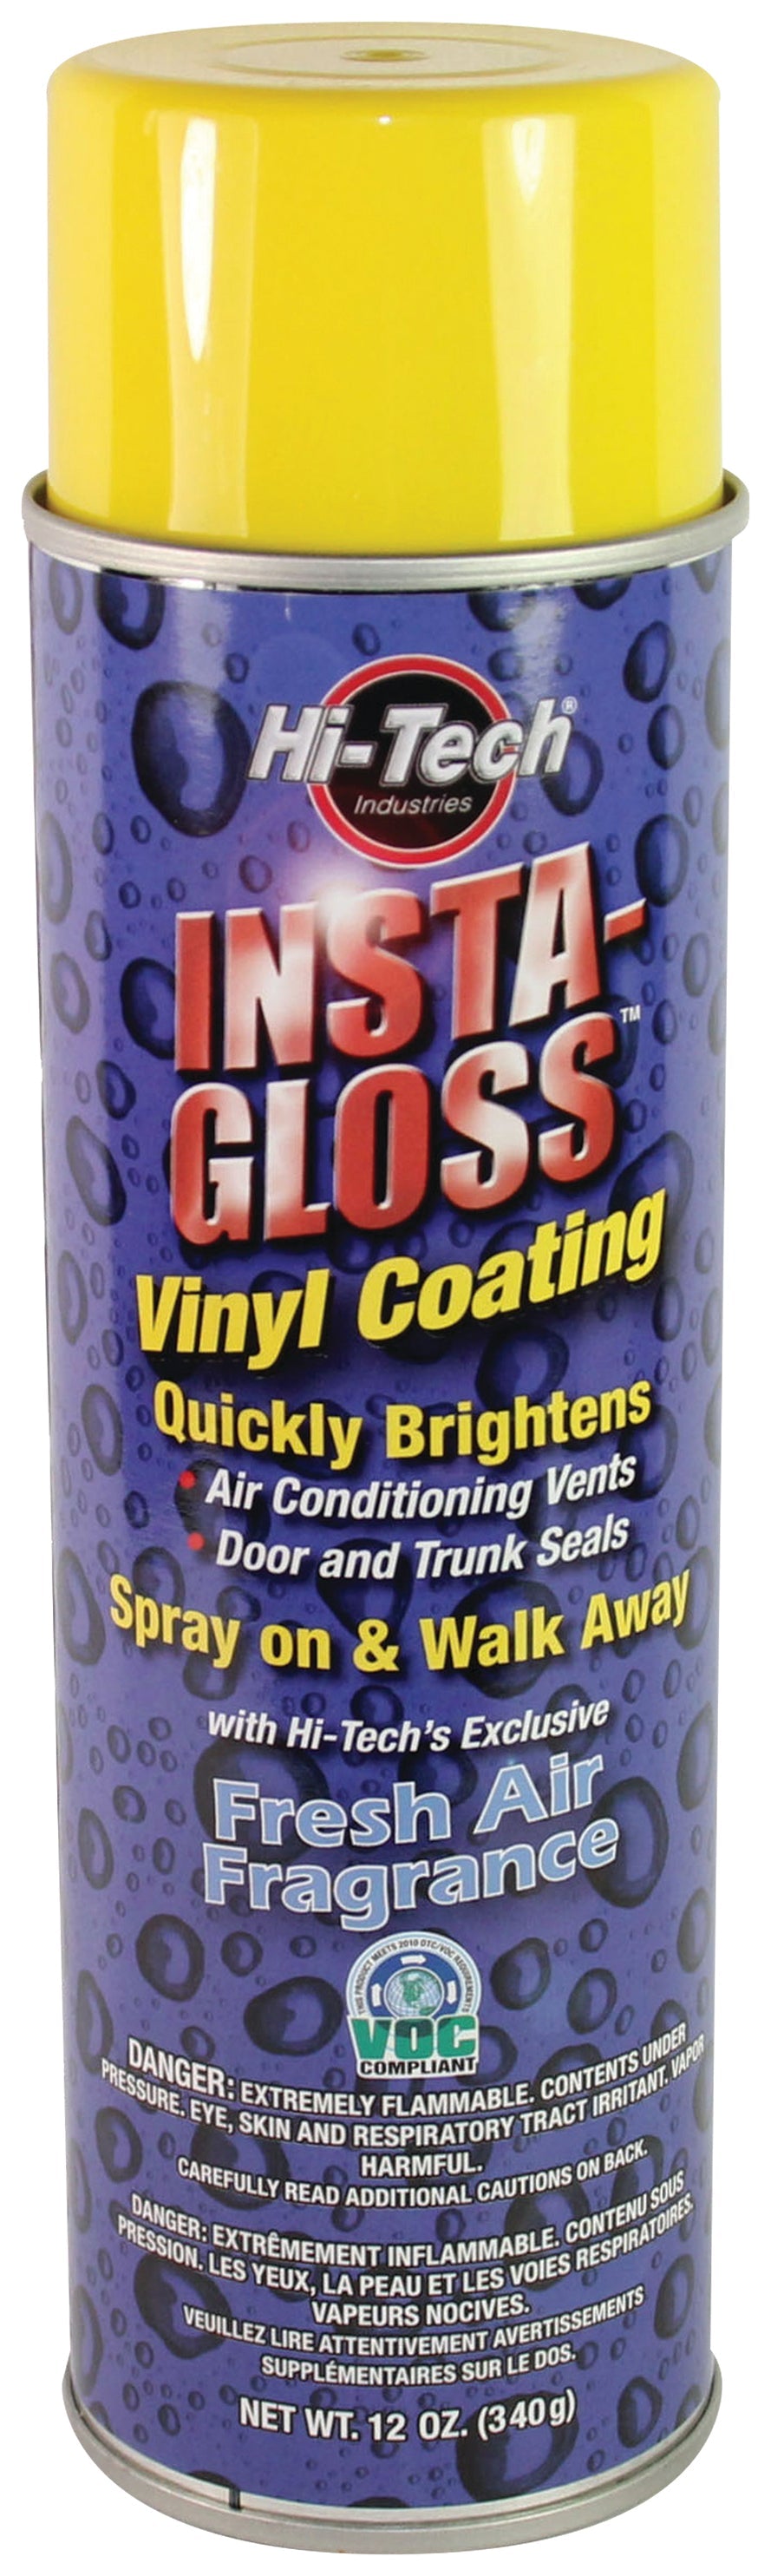 Insta-Gloss Vinyl Coating w/Fresh Air Fragrance